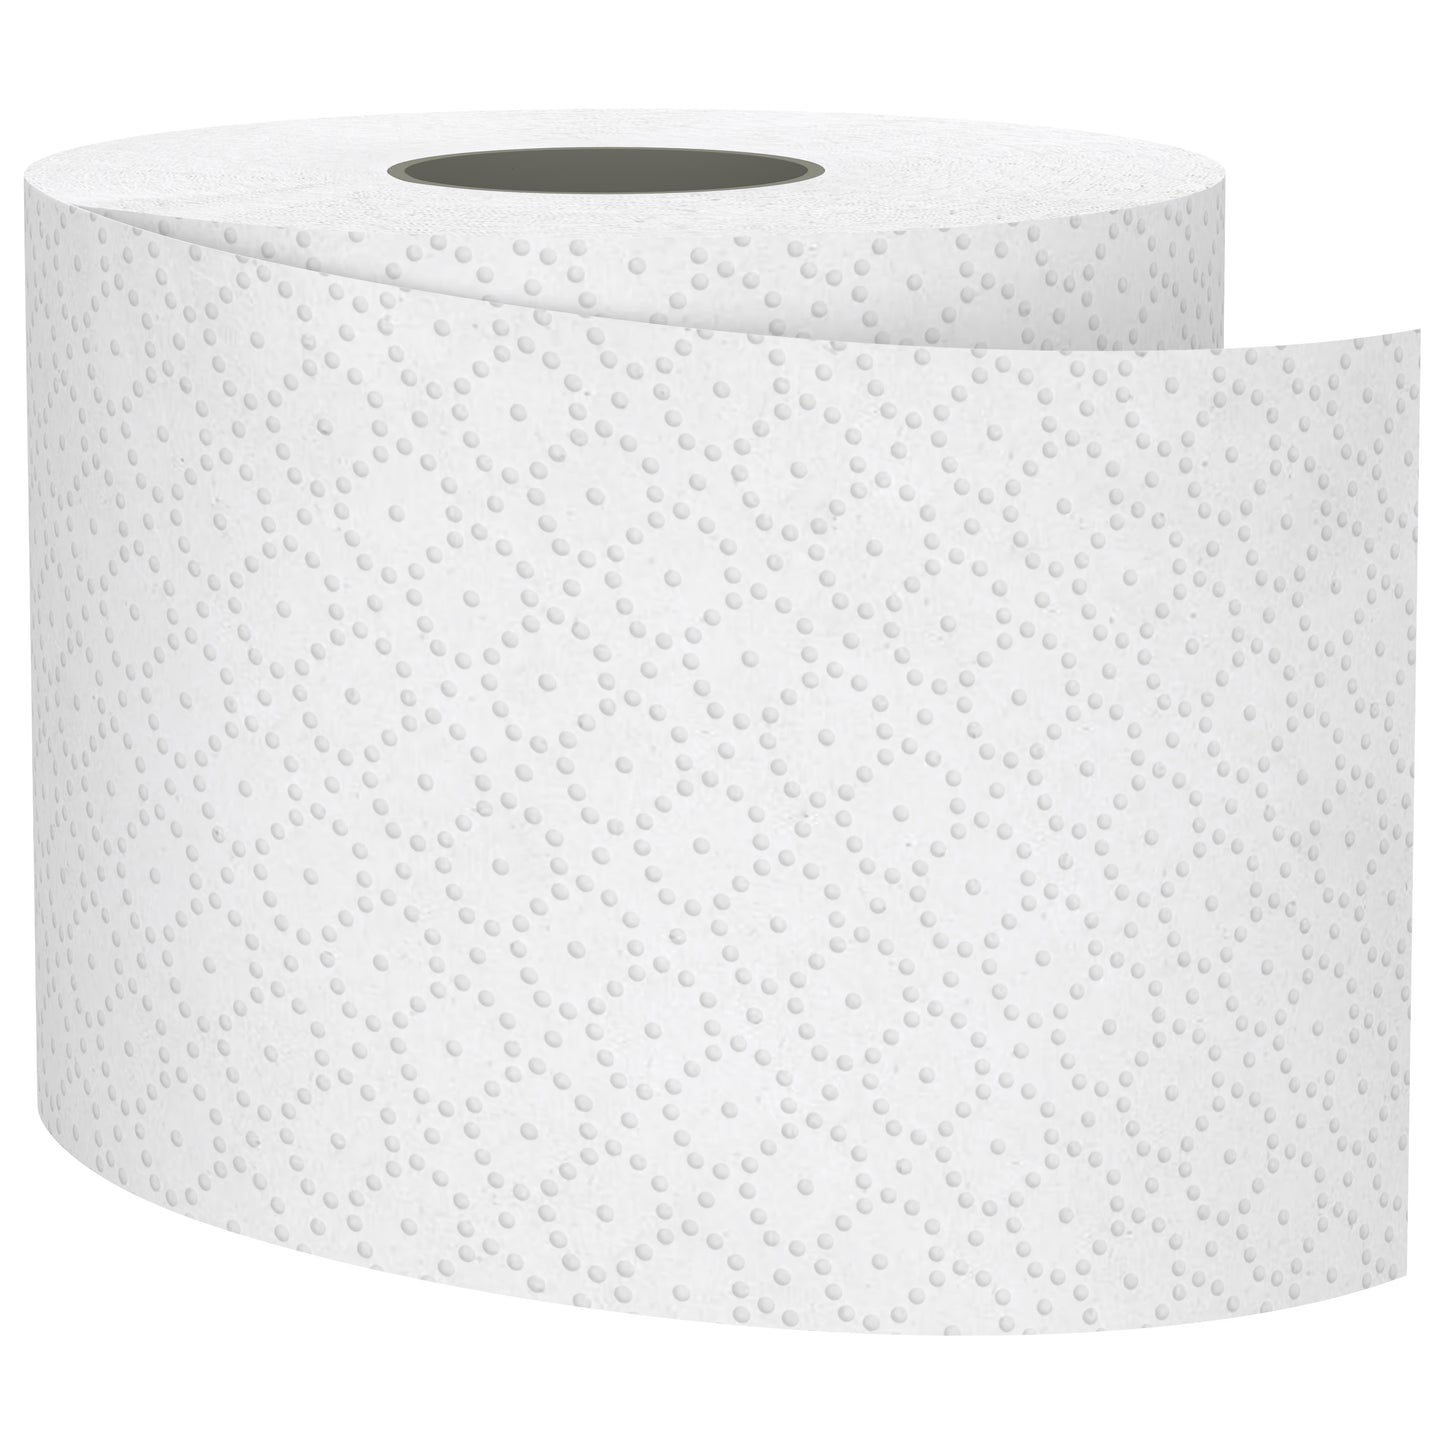 Satino Comfort Toilettenpapier Kleinrollen, 3-lagig, 72 Rollen